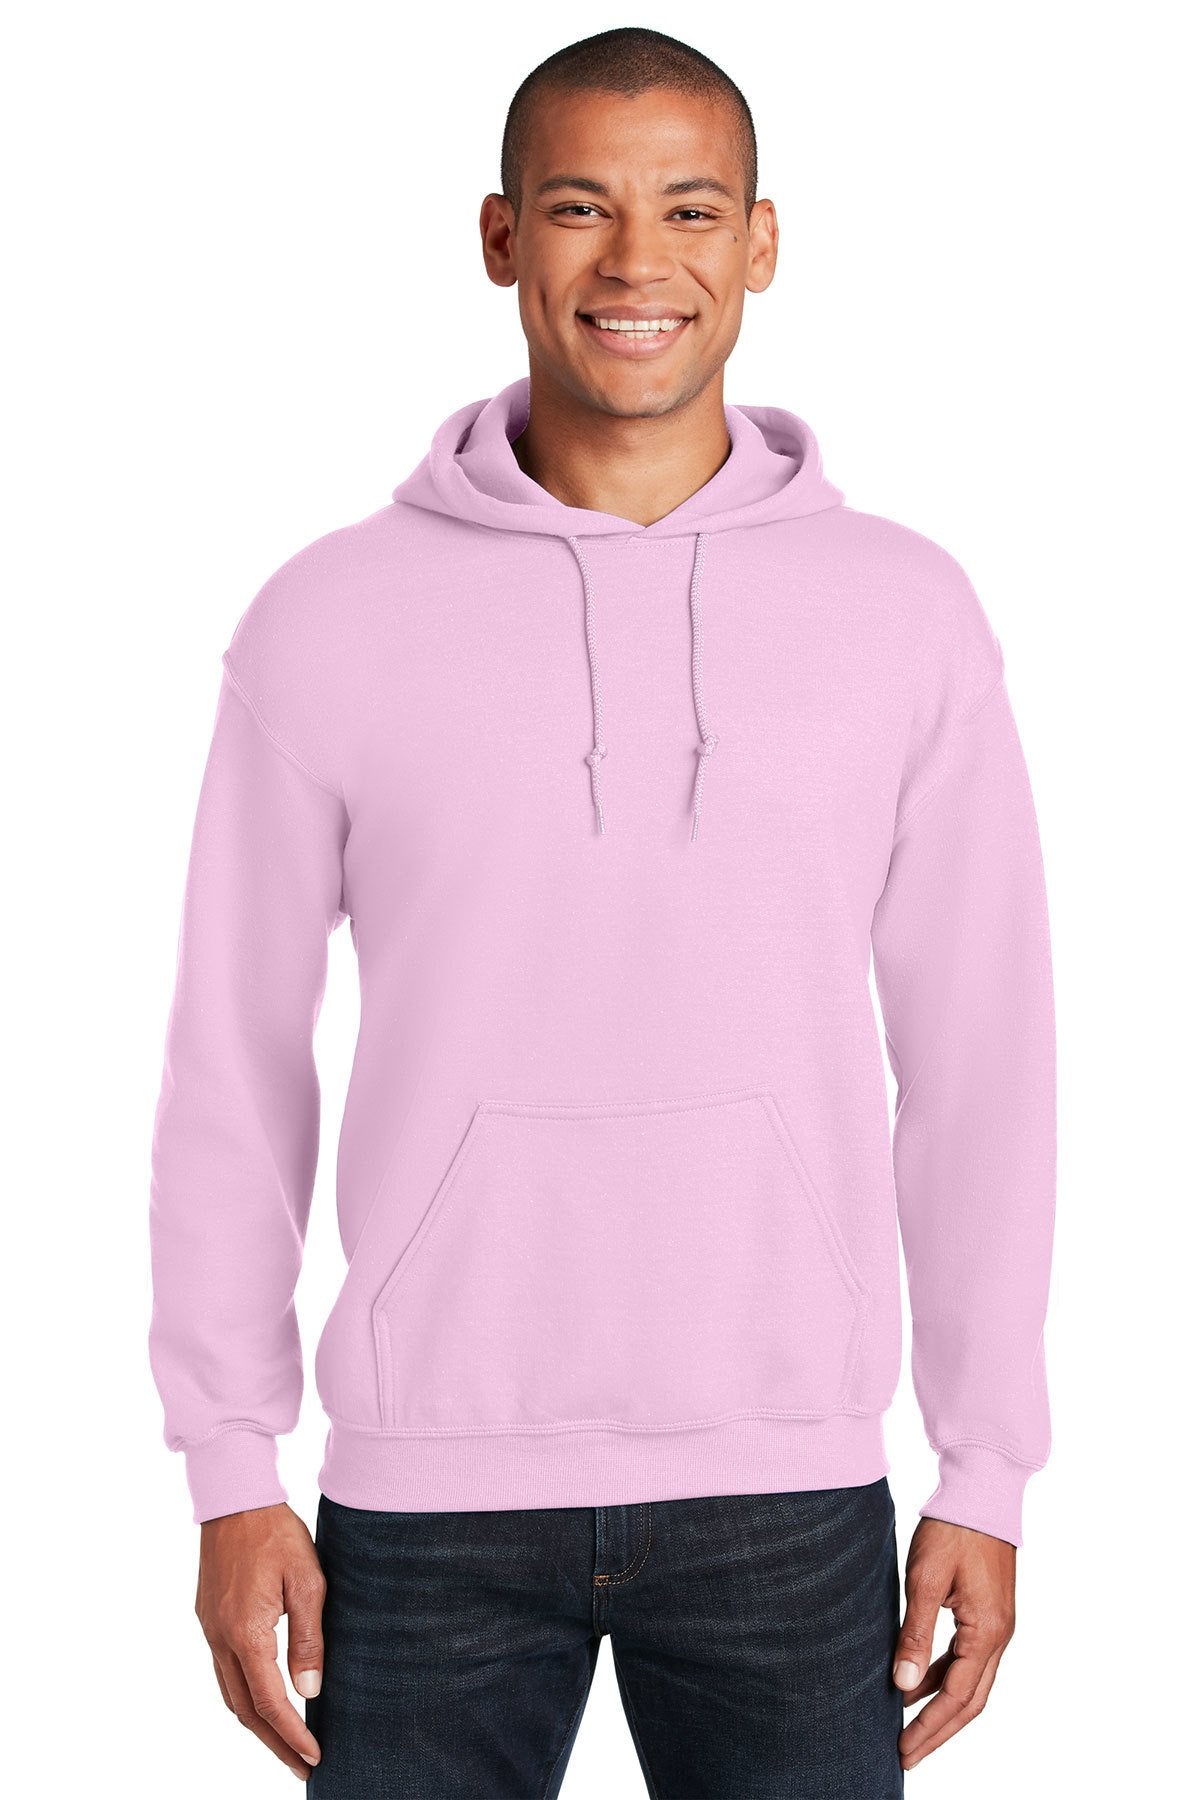 Gildan Light Pink 18500 sweatshirts with logos